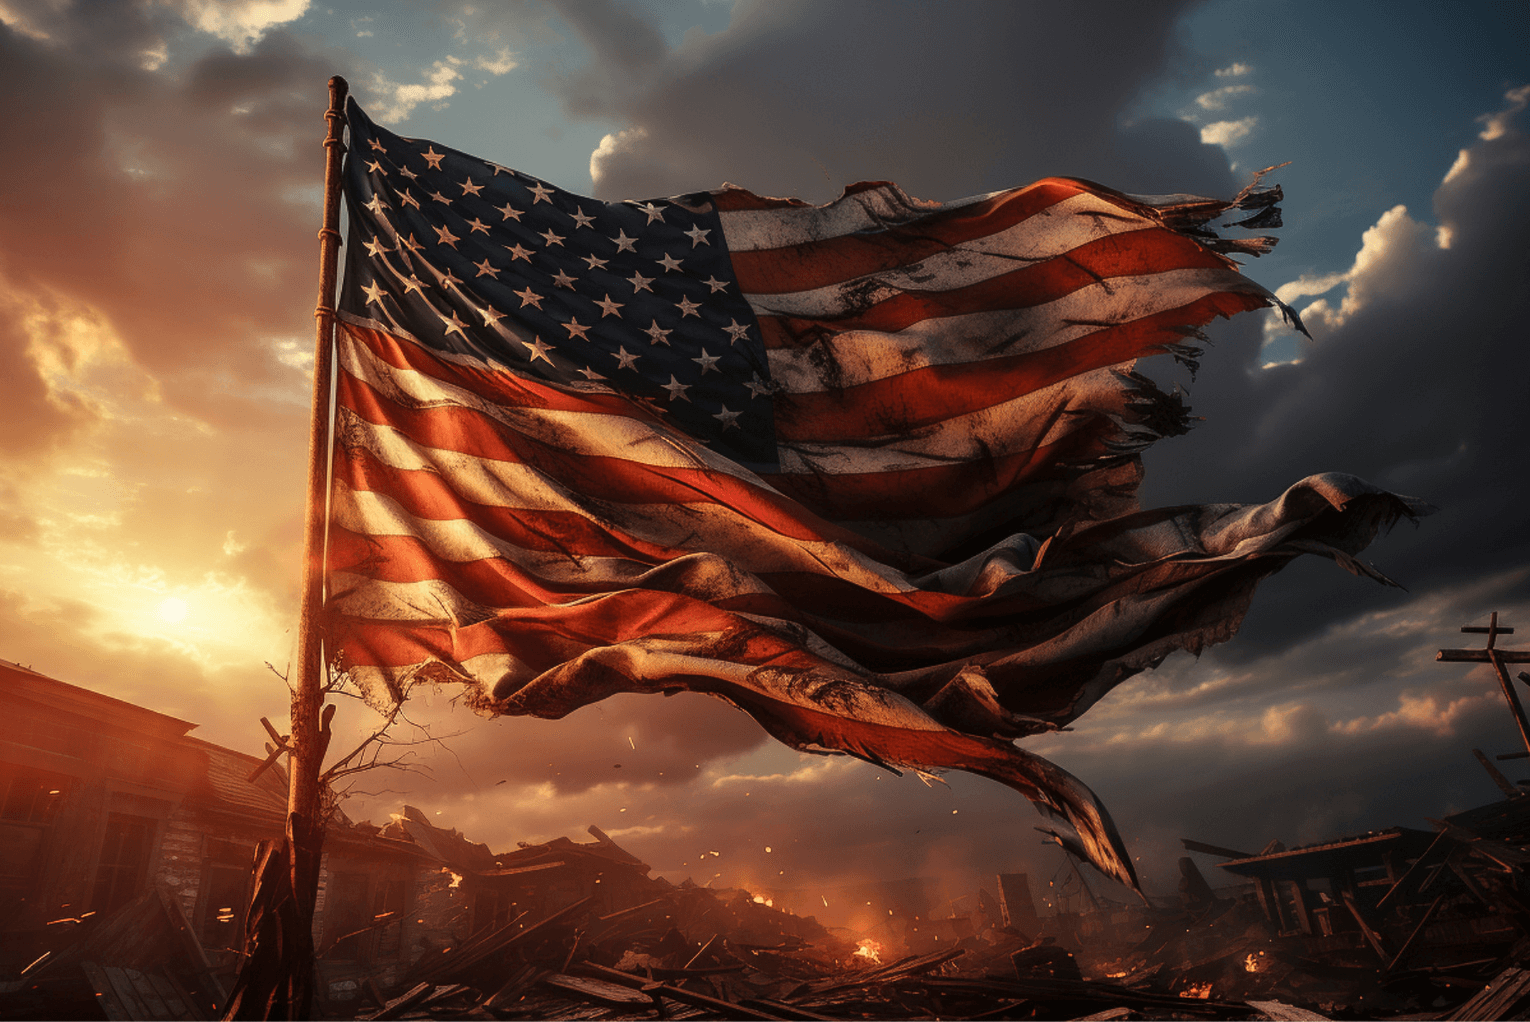 Prophetic Dream Warning: Danger is Coming for America